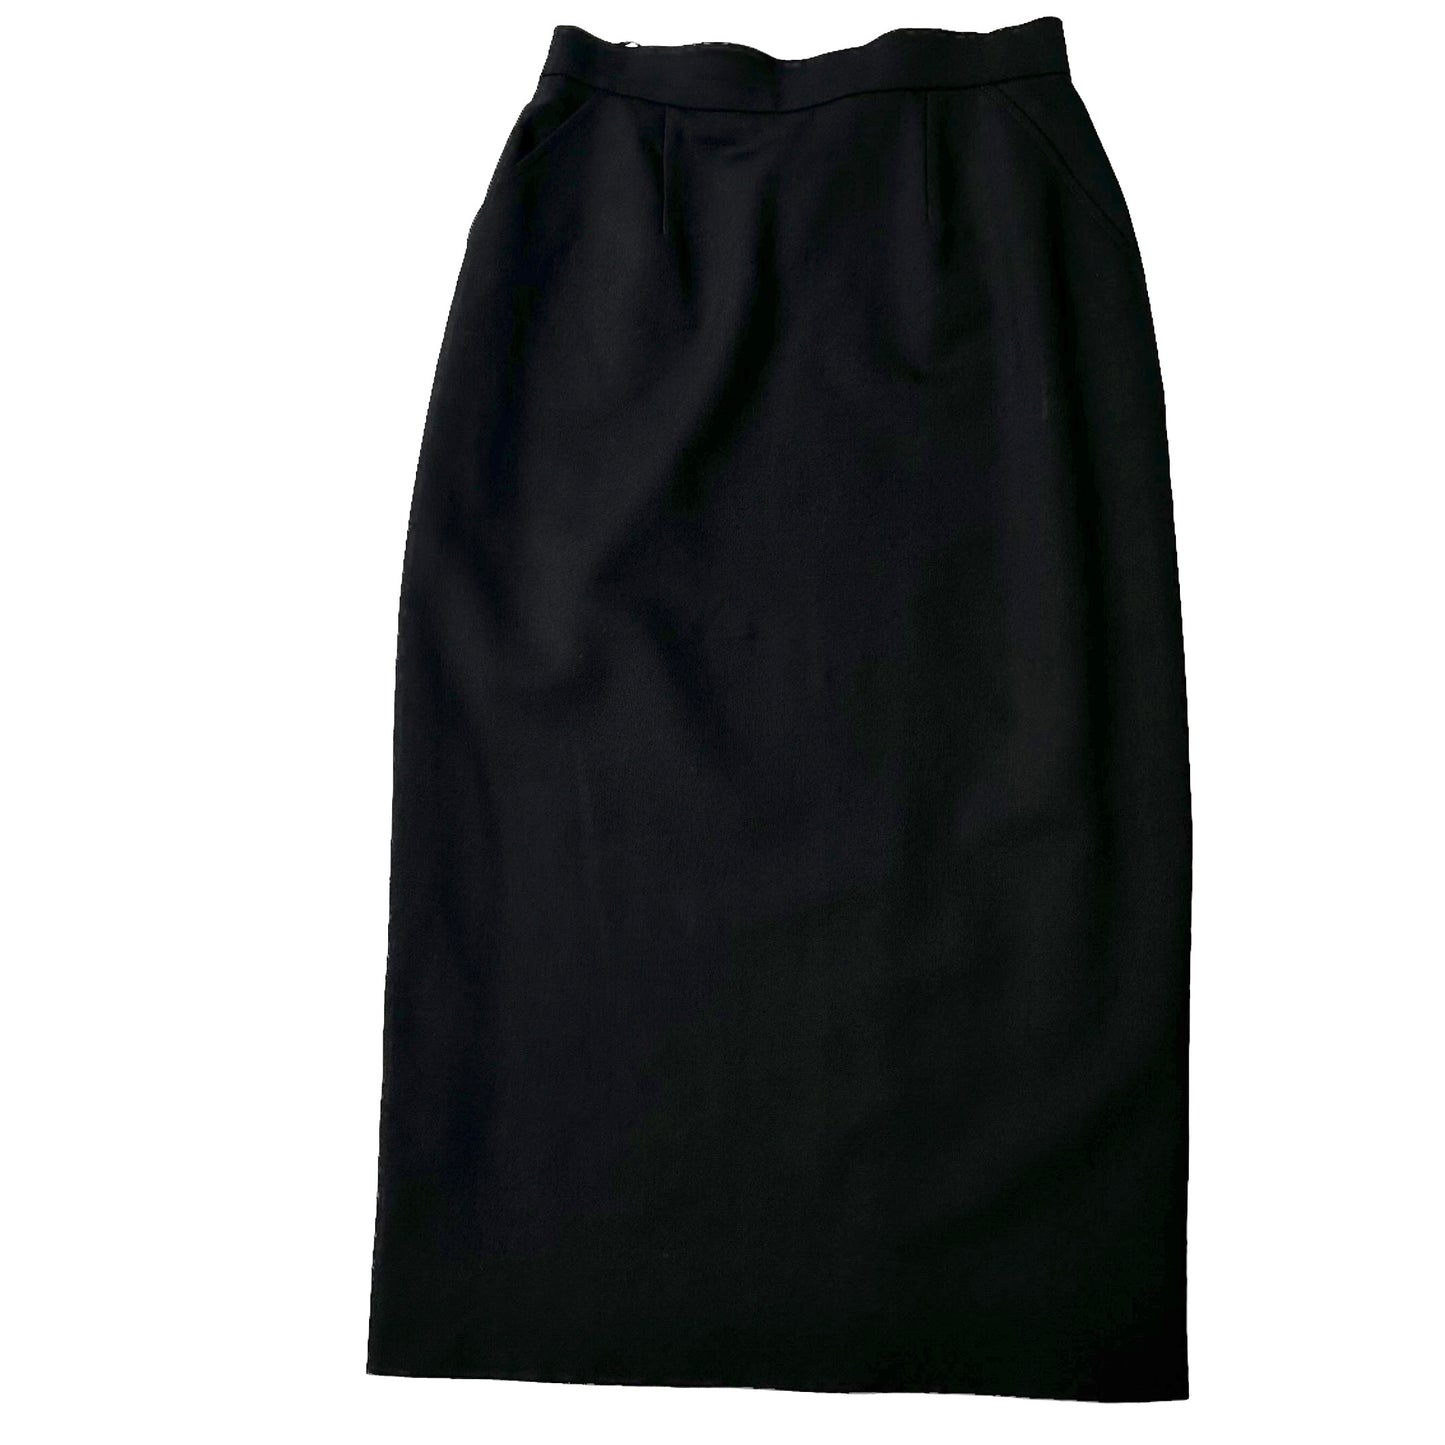 Black Pencil Skirt w/CC Buttons - S